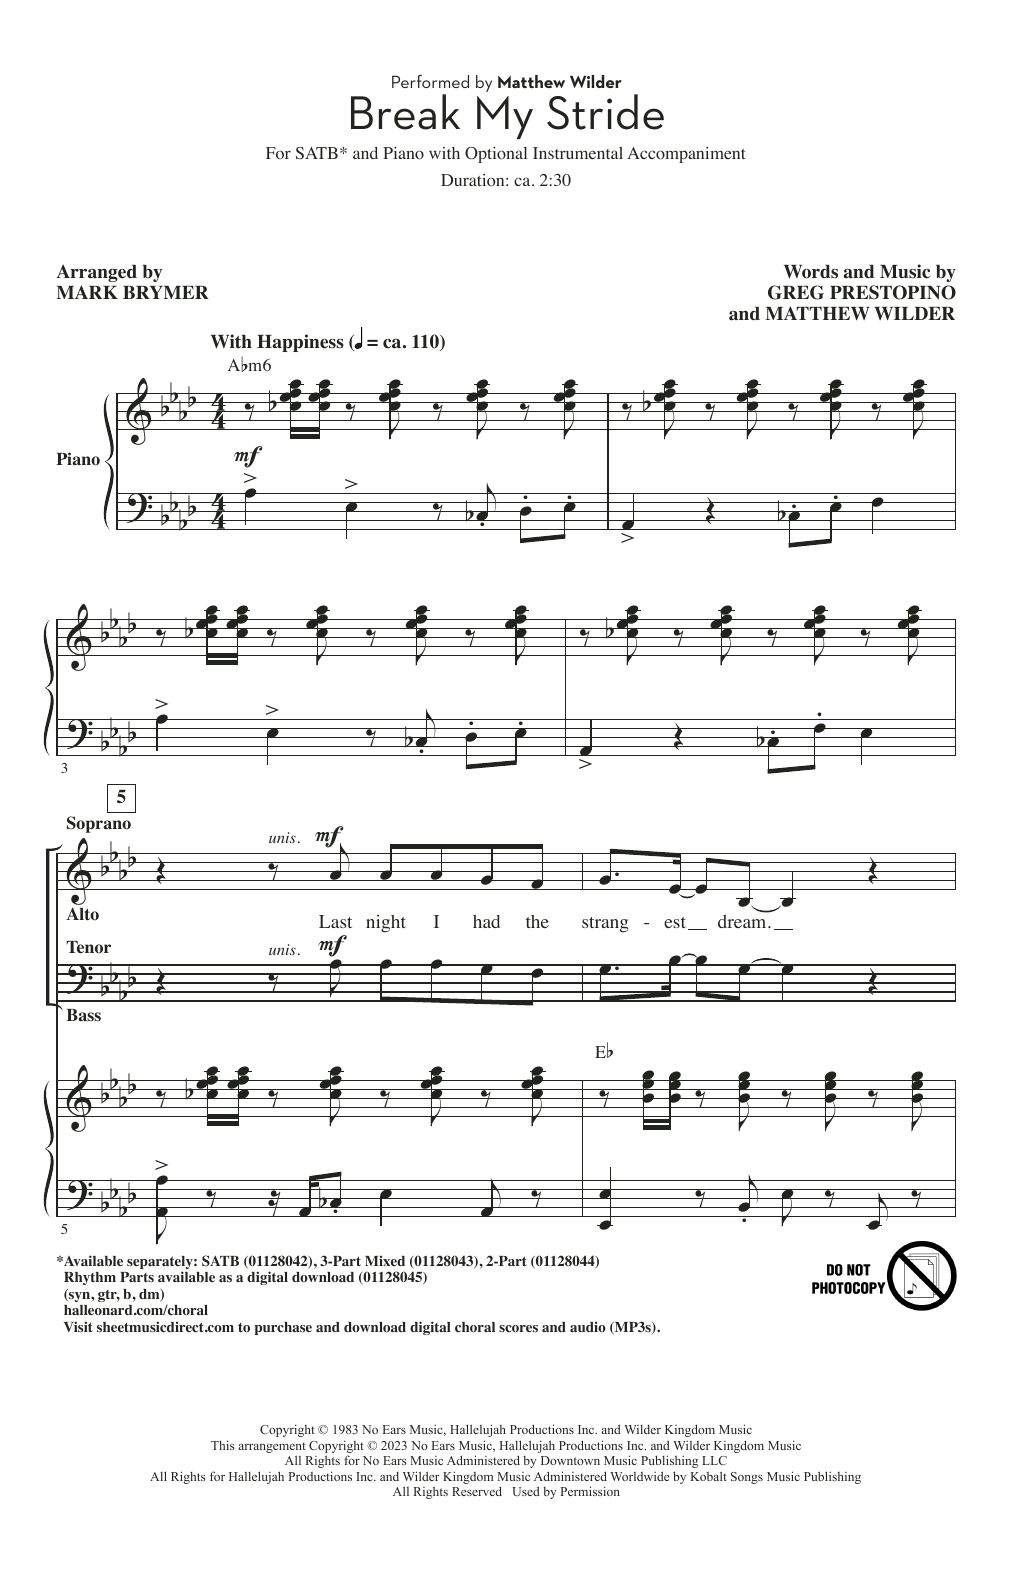 Matthew Wilder Break My Stride (arr. Mark Brymer) Sheet Music Notes & Chords for 2-Part Choir - Download or Print PDF